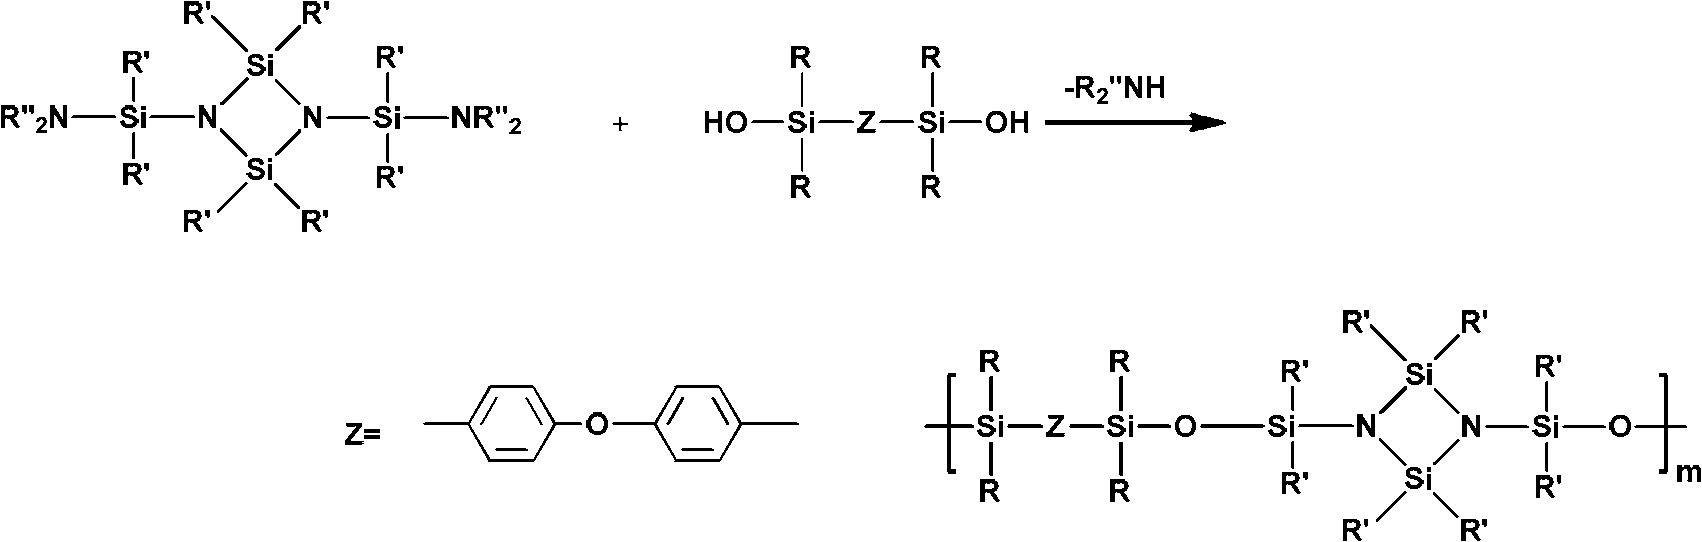 Heat-resisting poly (silazane-siloxane) polymer and preparation method thereof